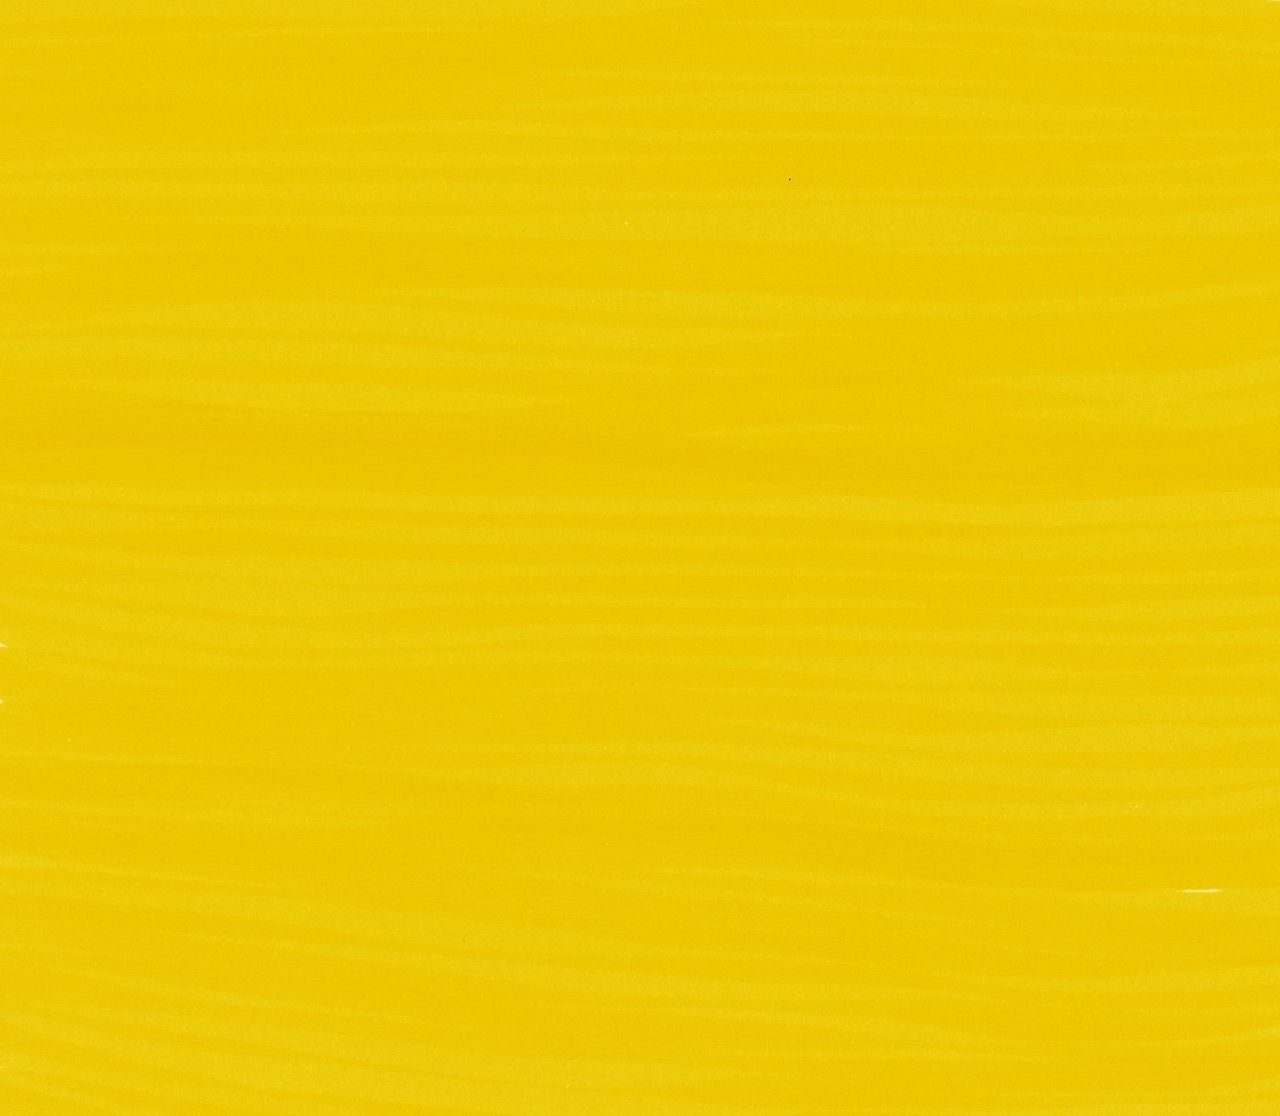 Download 74+ Yellow Background Image on WallpaperSafari